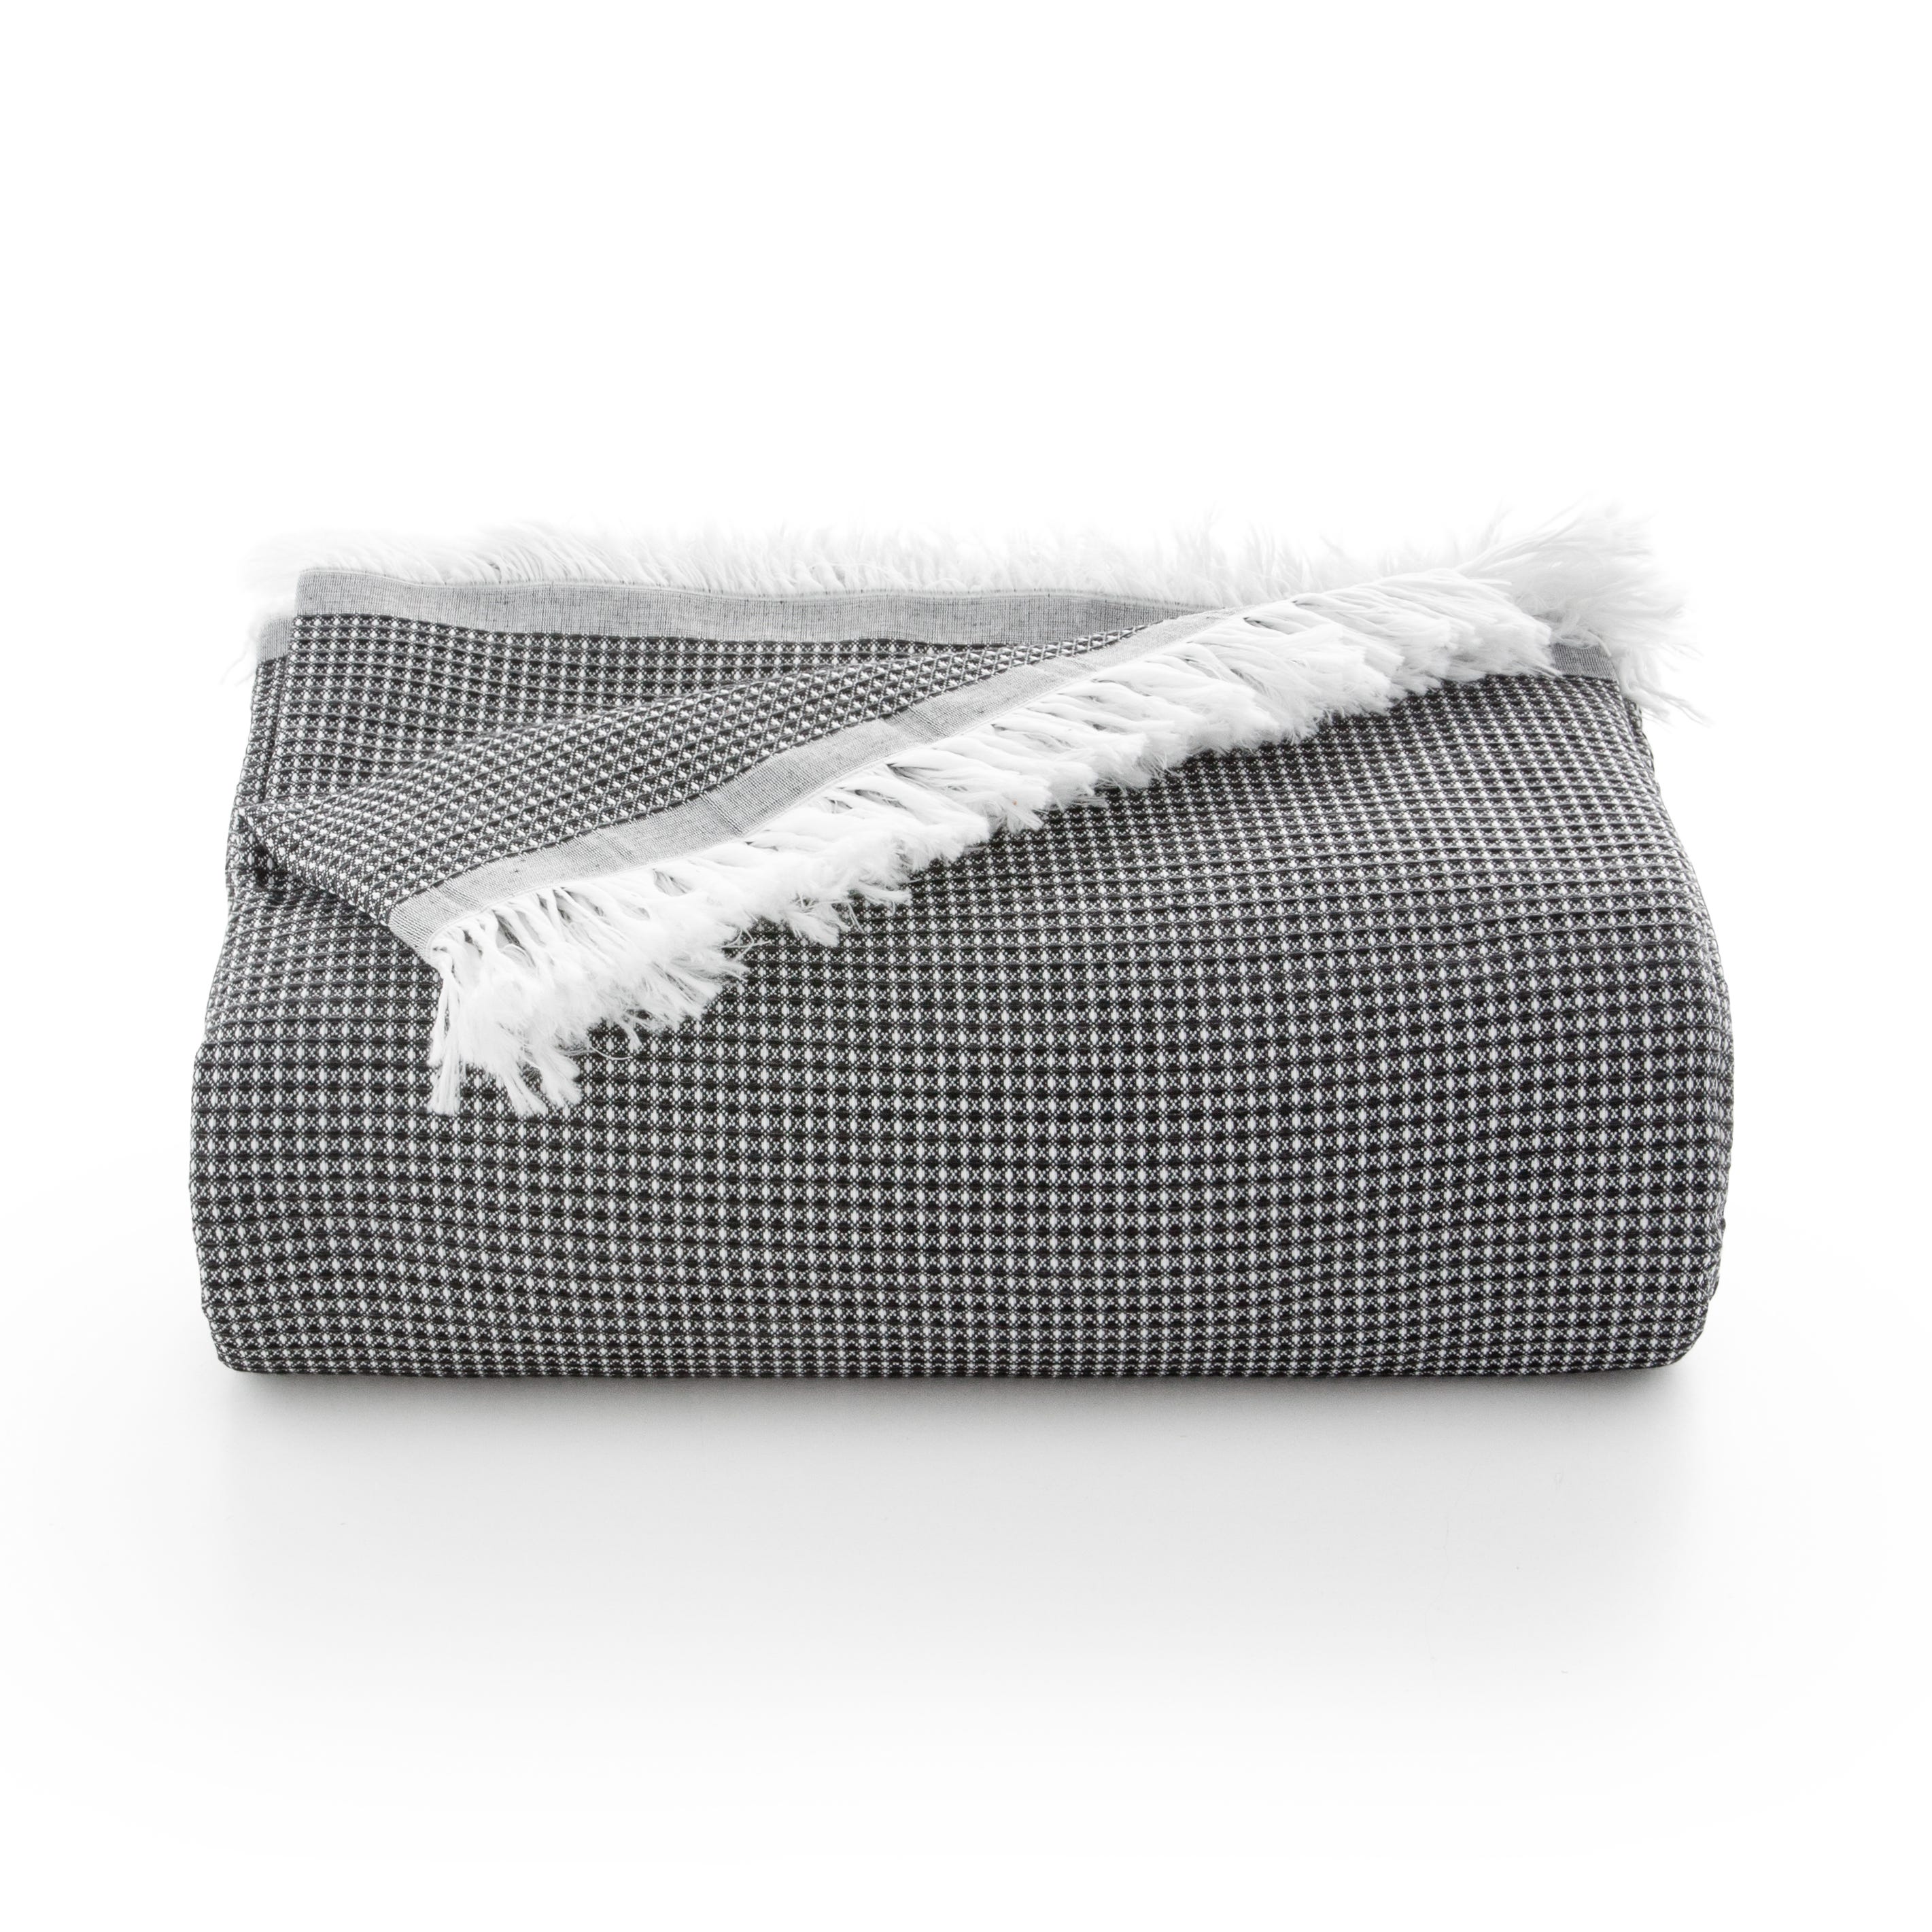 140 ideas de Mantas de sofa  mantas de ganchillo, colcha de ganchillo,  mantas tejidas